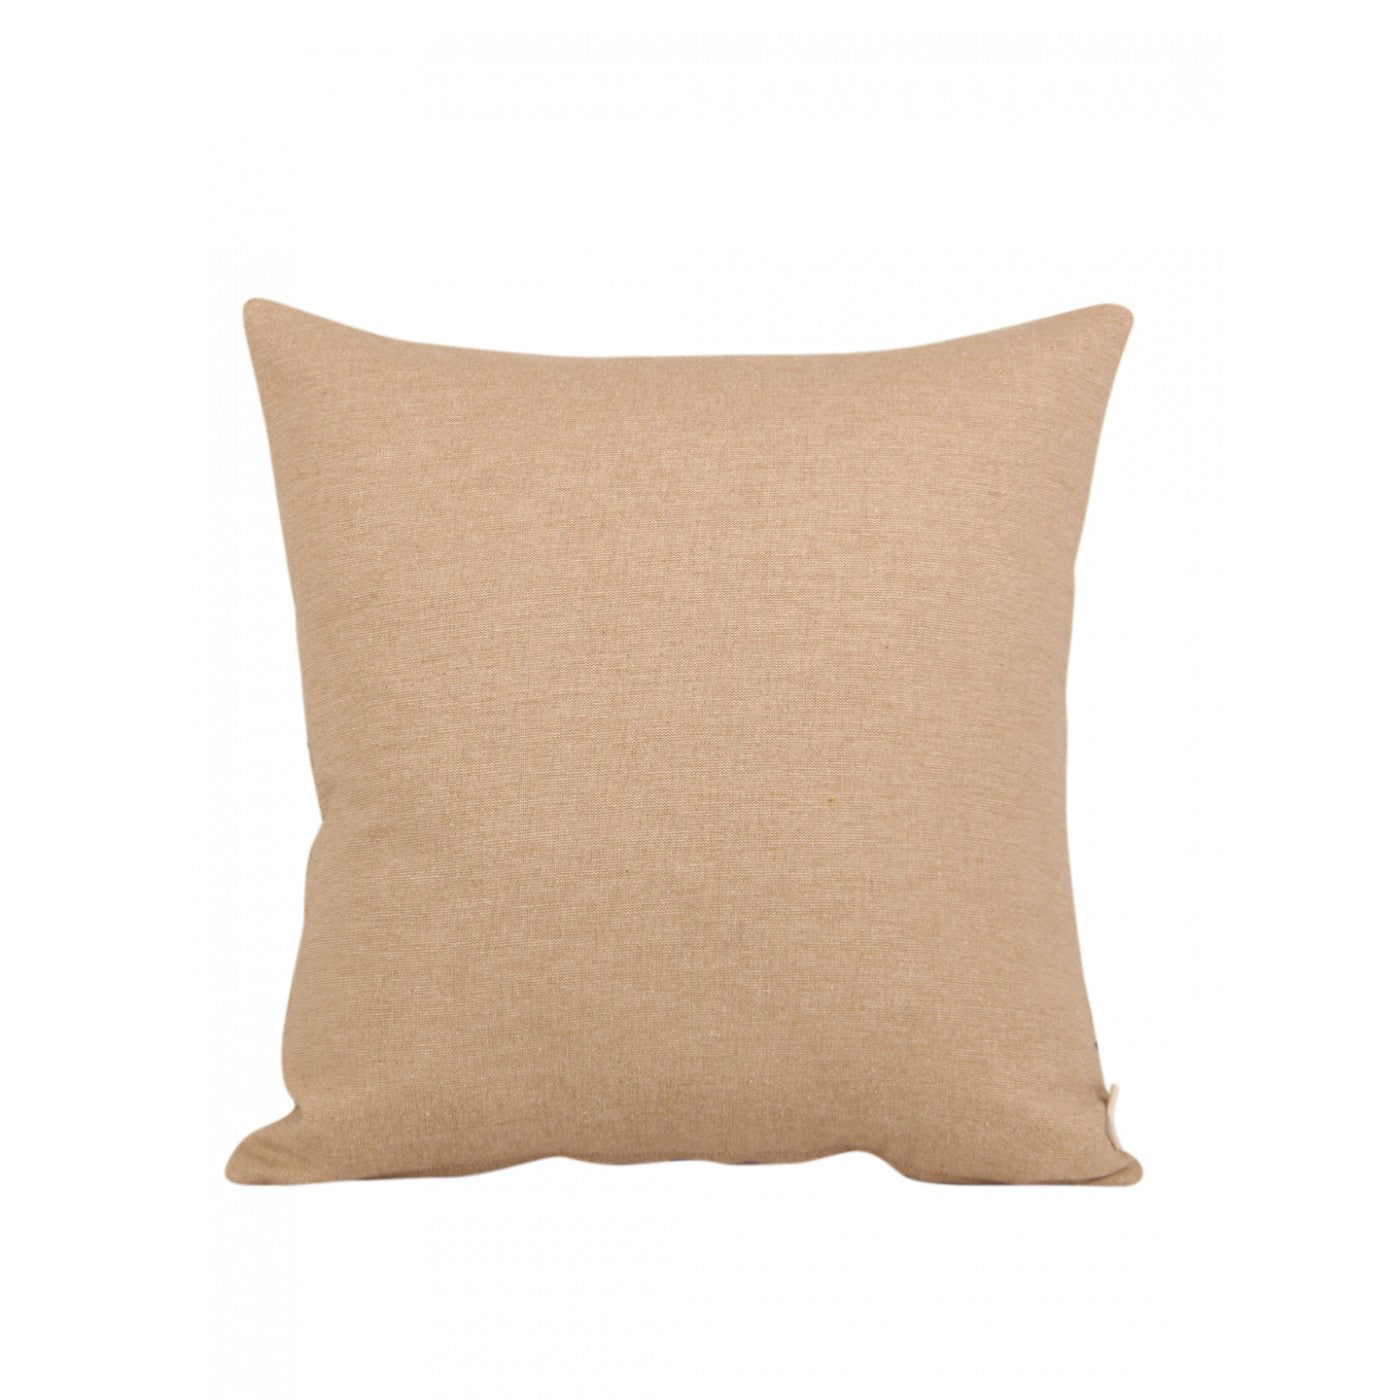 Earthen Comfort 16x16 Inch Beige Cotton Cushion Cover